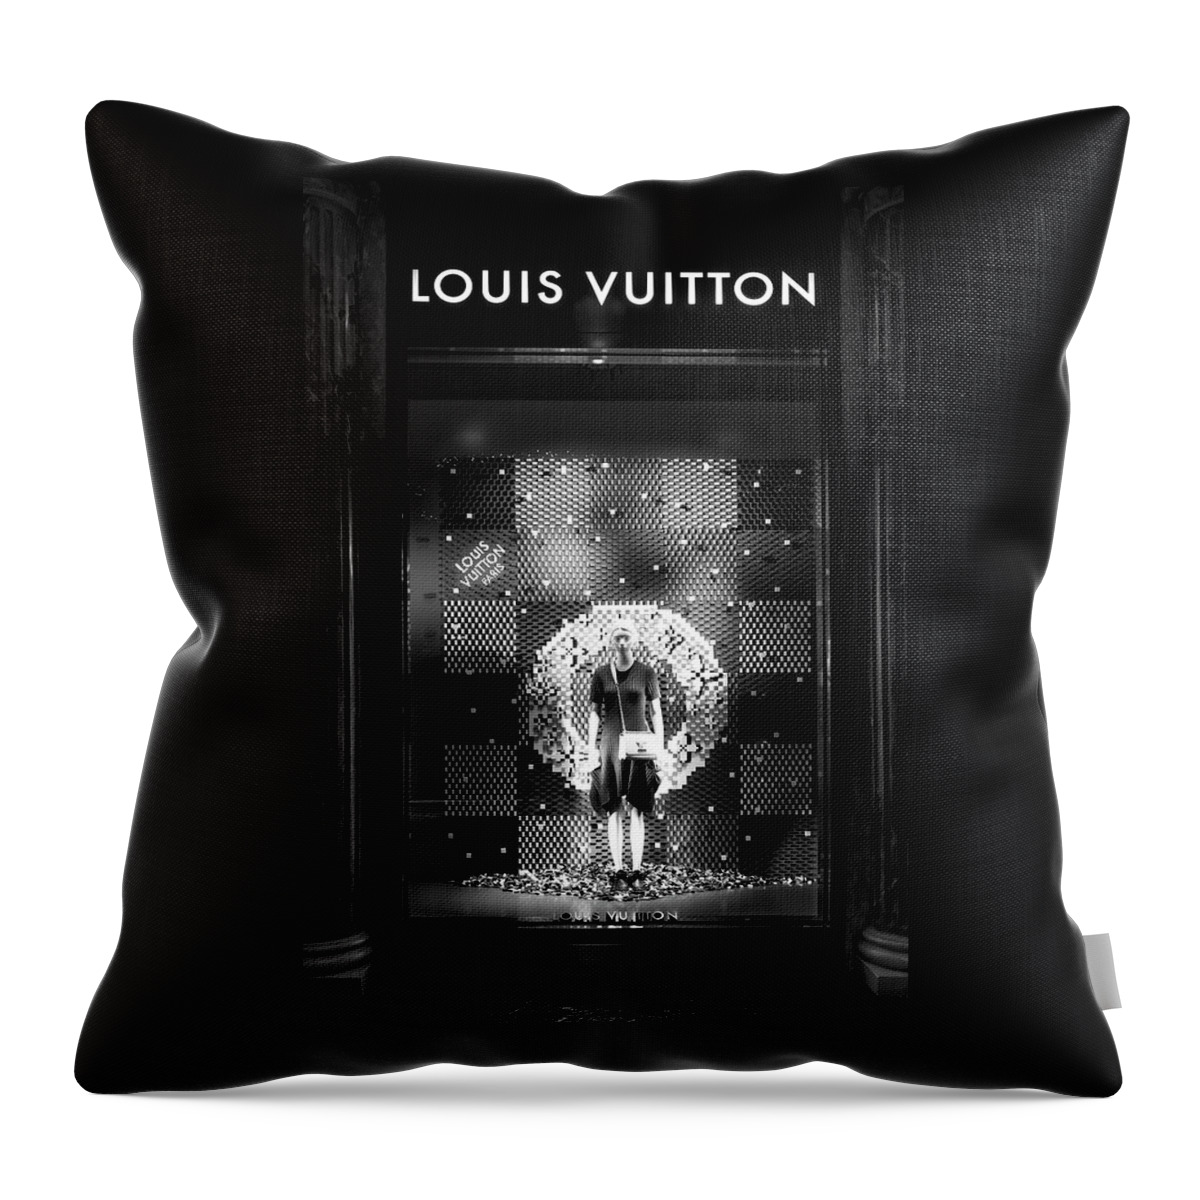 Louis Vuitton At Caesars Throw Pillow by Ricky Barnard - Pixels